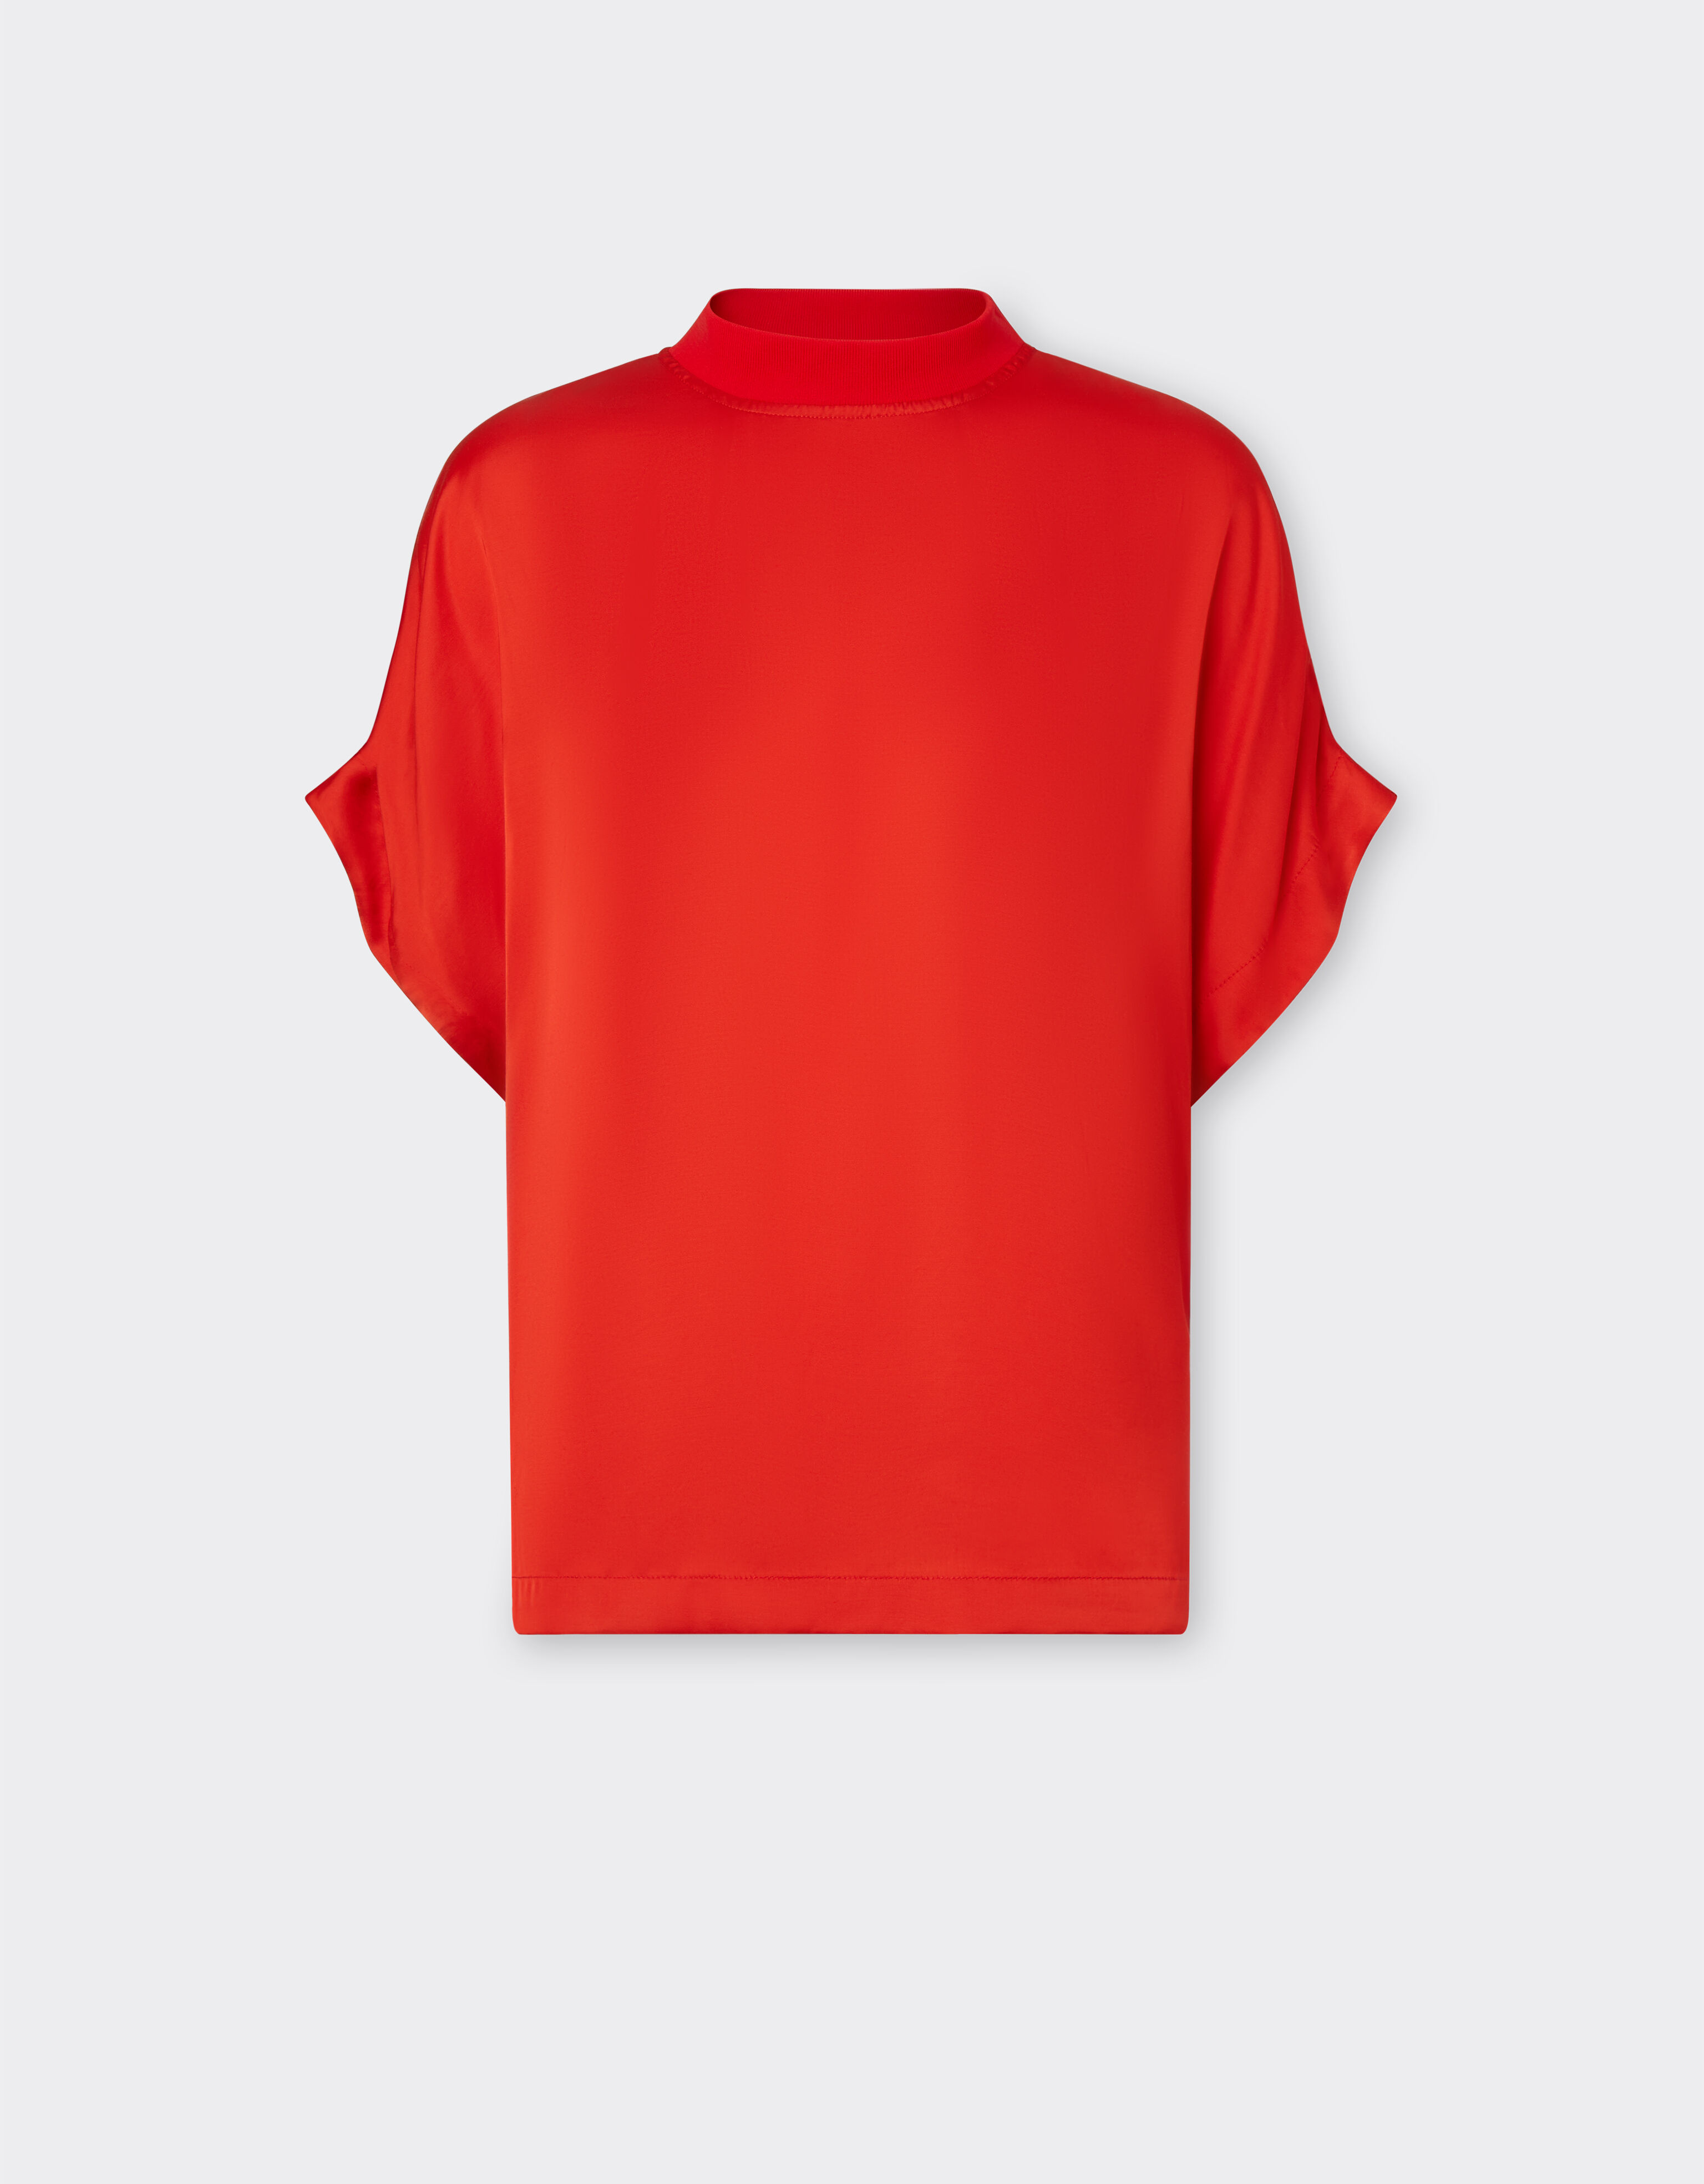 Ferrari Seiden-T-Shirt mit hohem Kragen in Kontrastfarbe Rosso Dino 48309f